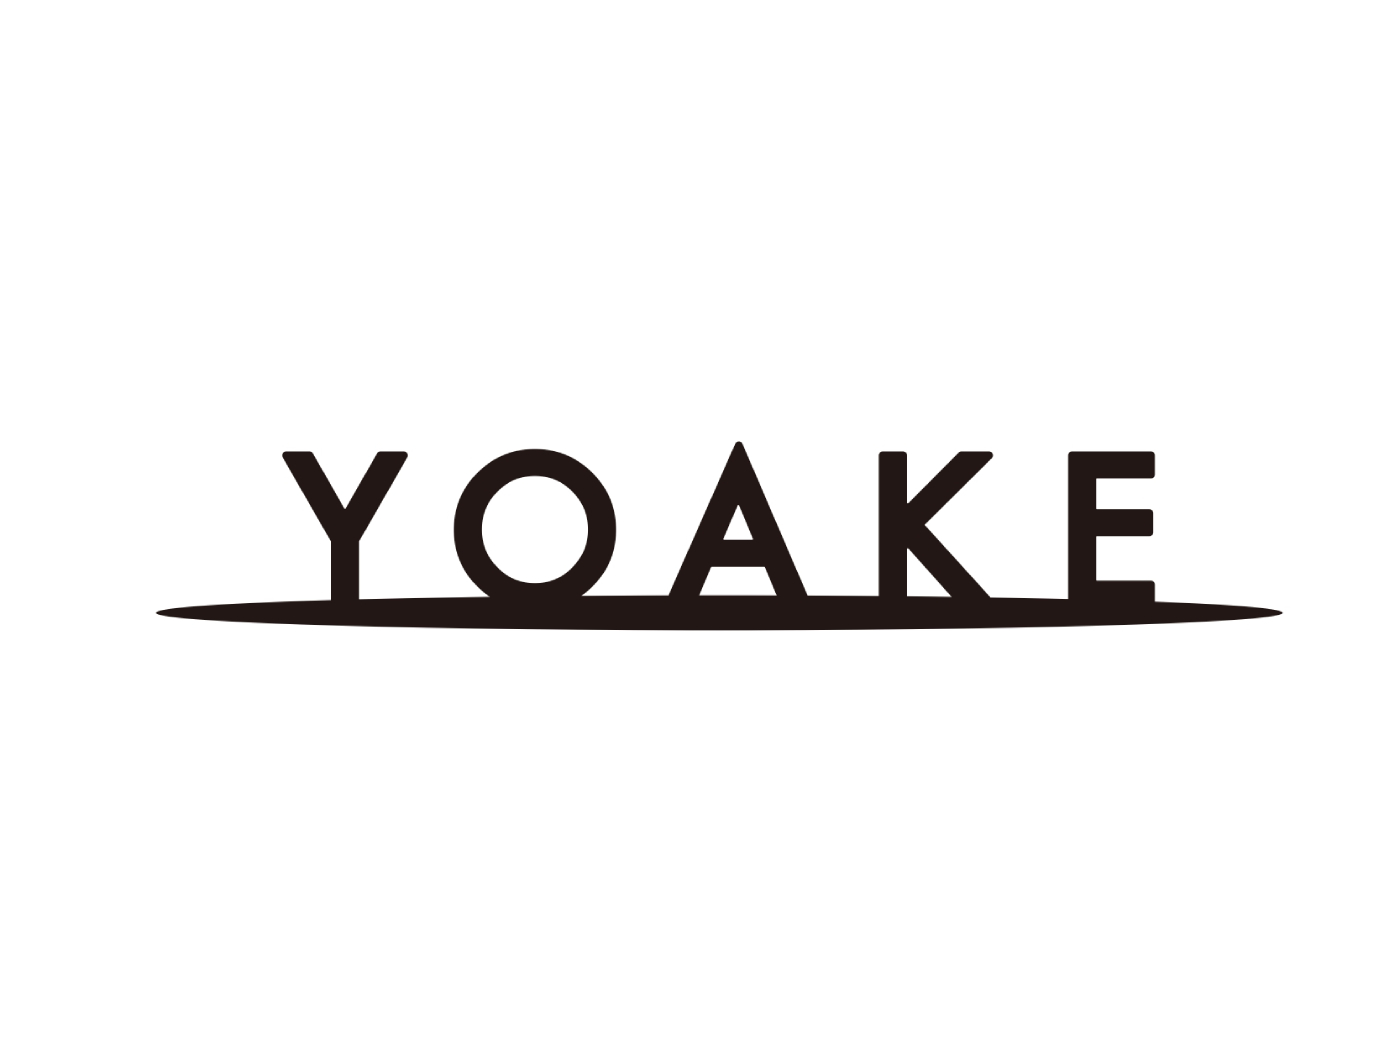 YOAKE、新曲「サムネ」配信リリース決定！ 白石聖、シエルが出演する“GINZA SIX”とのコラボMVも公開 - 画像一覧（1/3）